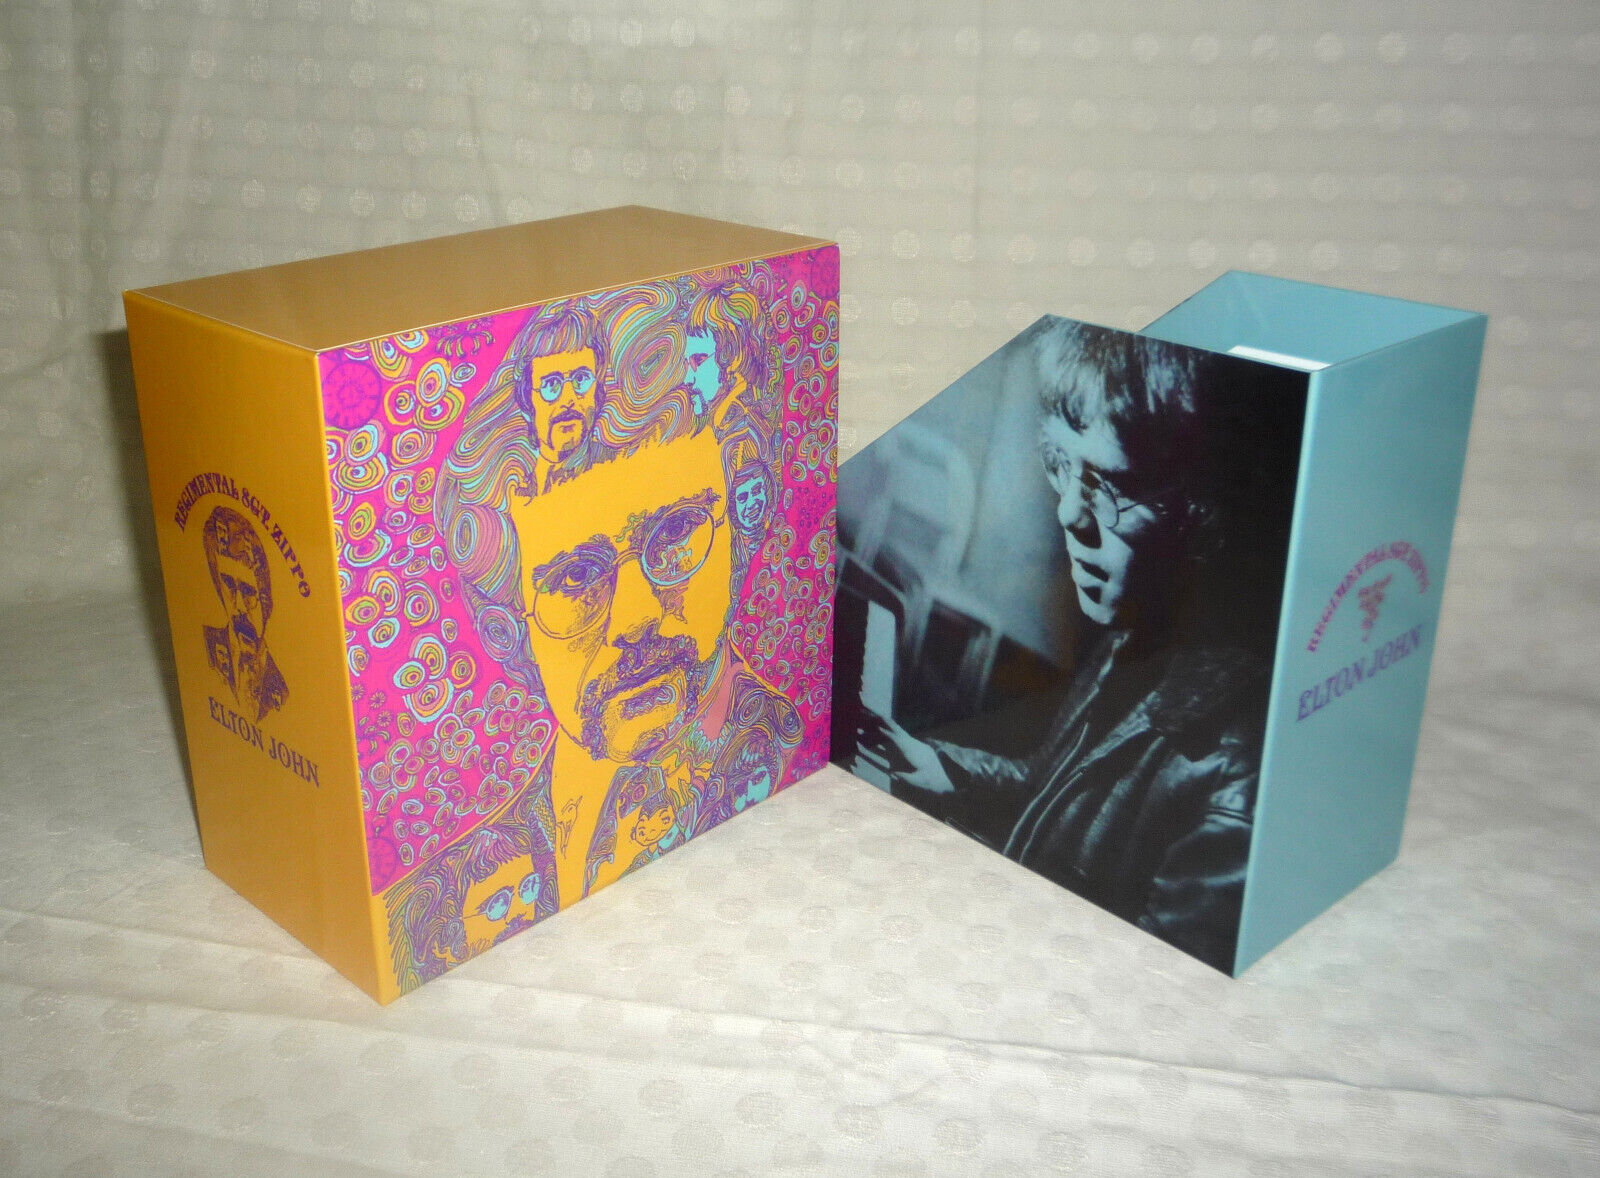 Elton John : Regimental Sgt. Zippo empty box for Japan mini lp,Jewel case cd